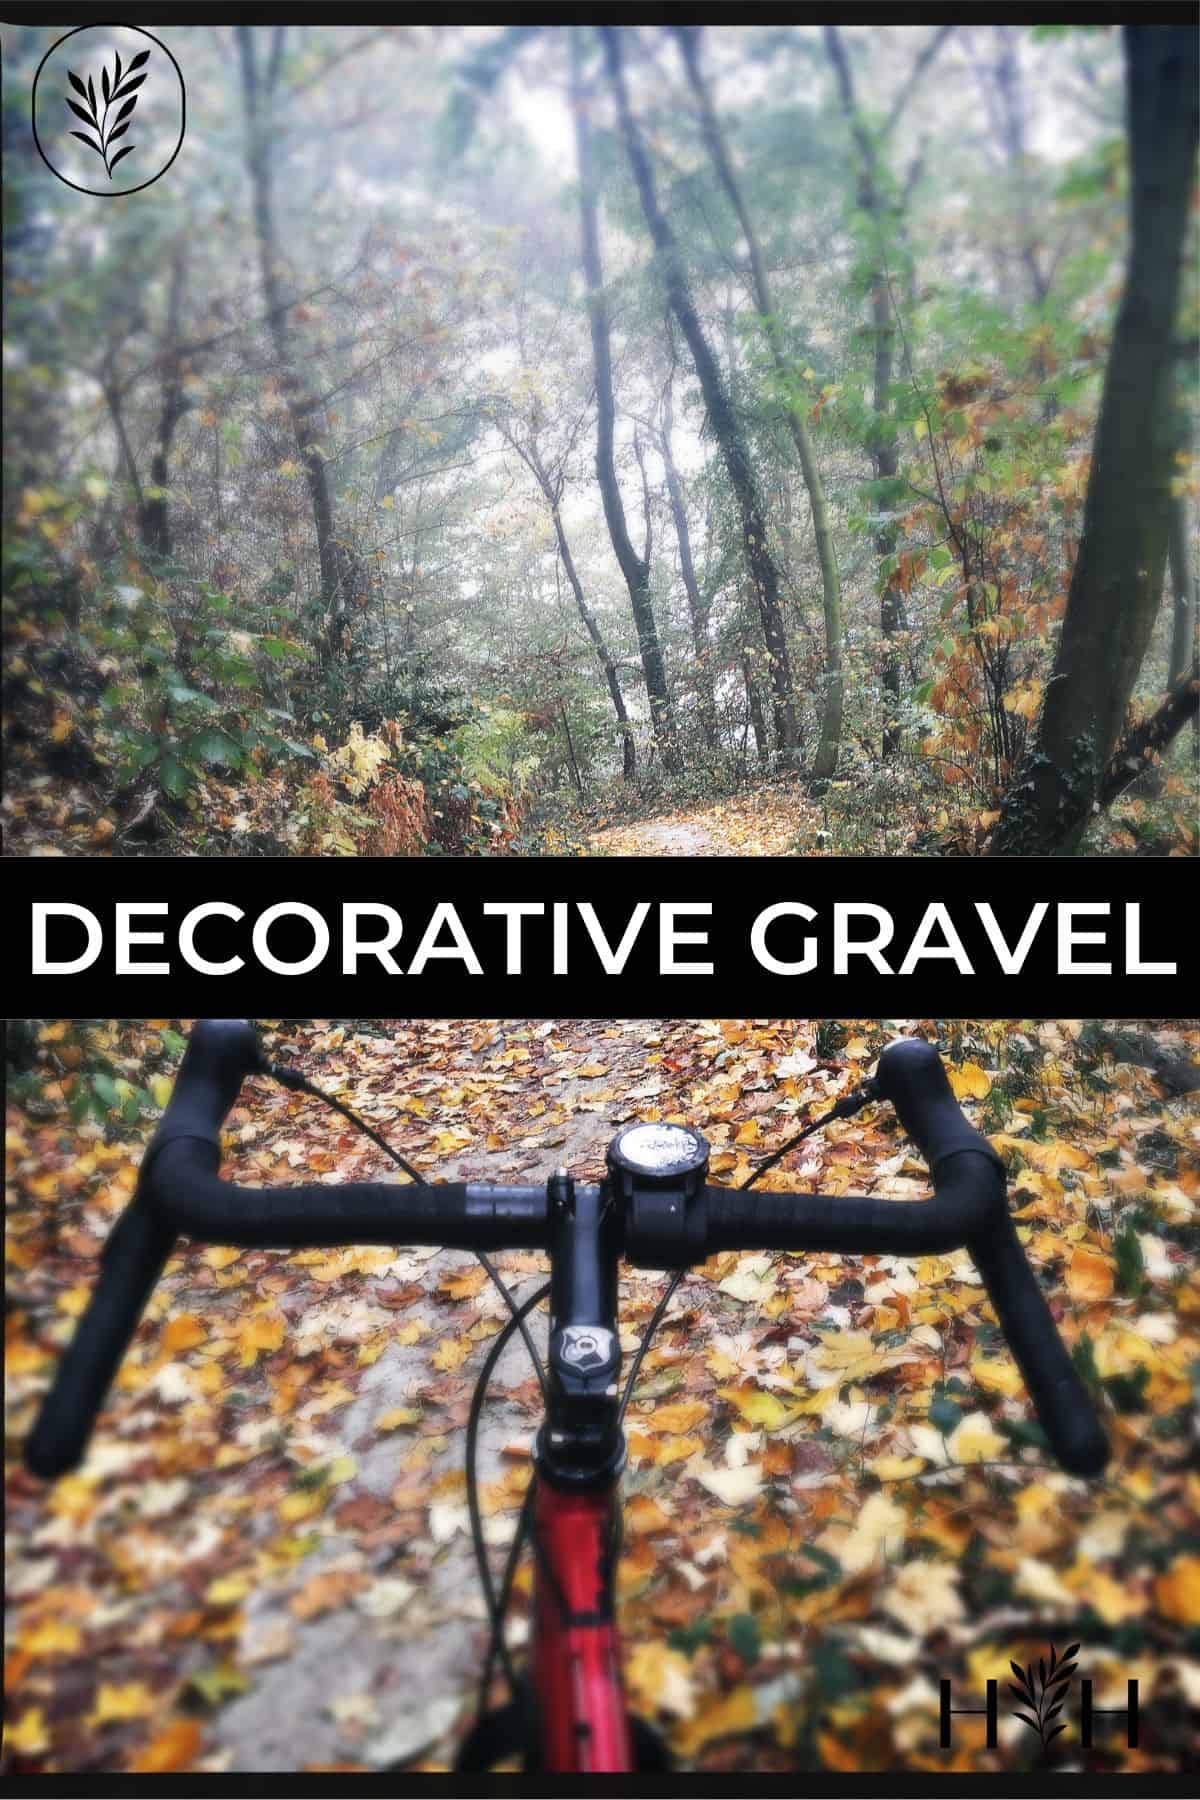 Decorative gravel via @home4theharvest